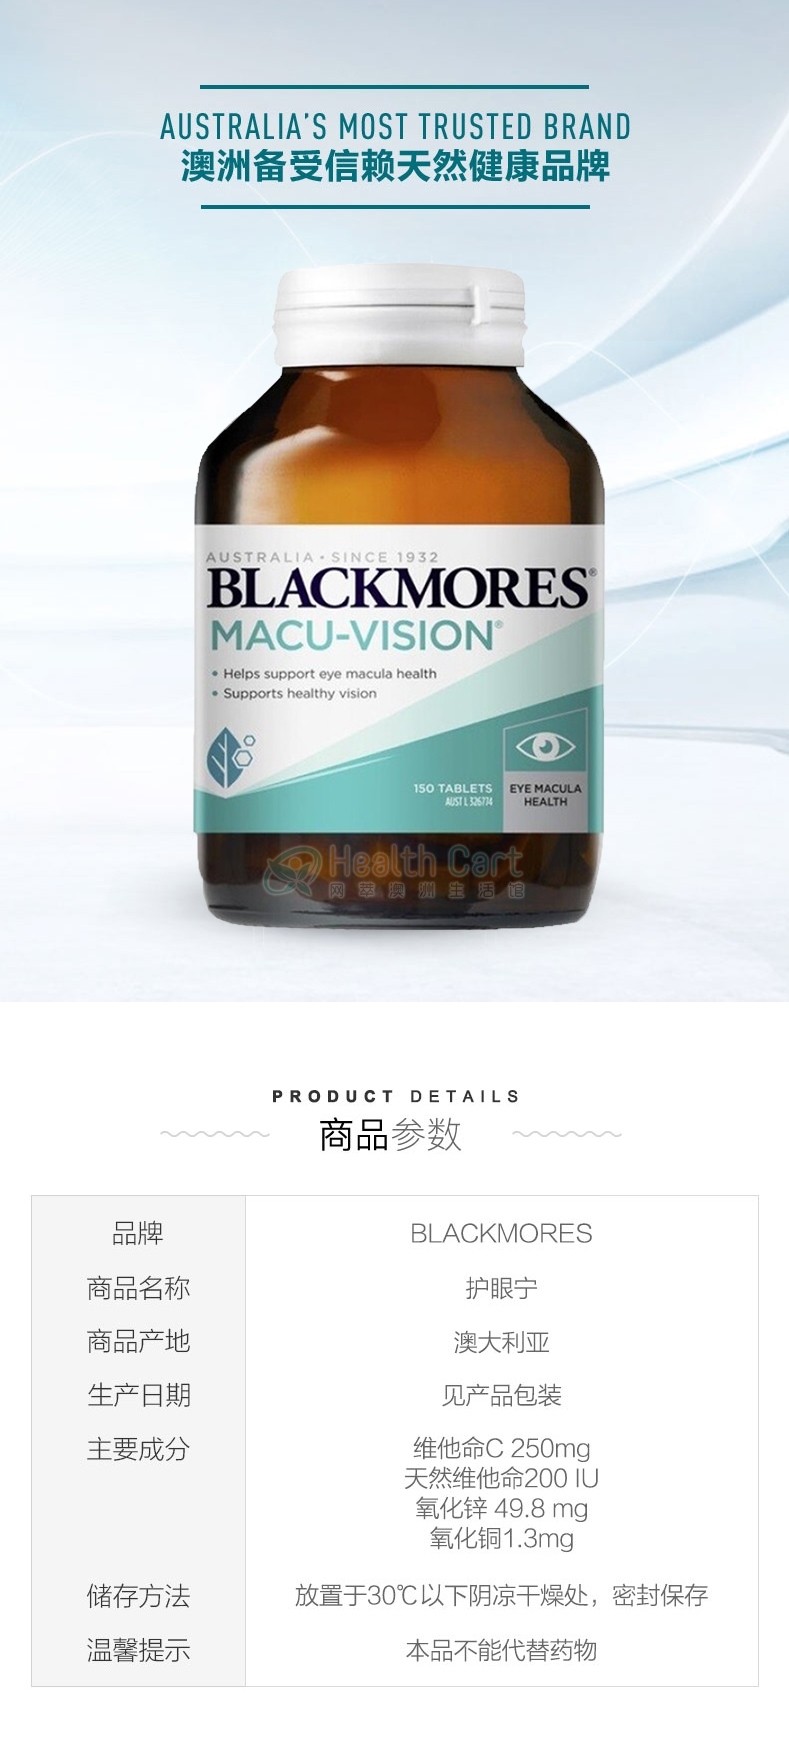 Blackmores Macu Vision 150 Tablets - @blackmores macu vision 150 tablets - 10 - Health Cart